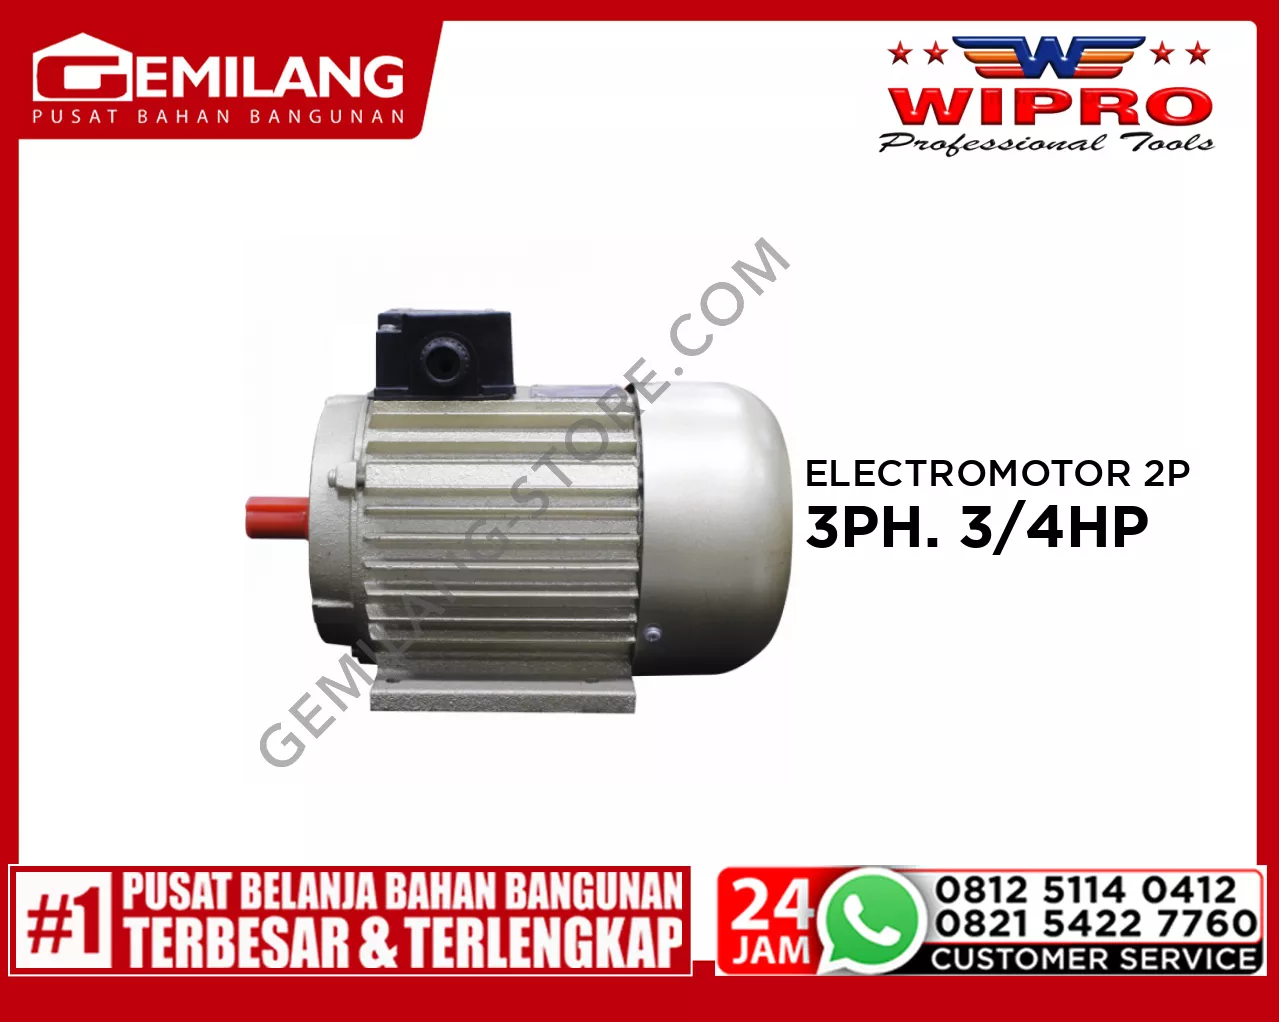 WIPRO ELECTROMOTOR 3 PHASE 3/4HP 2P (FOAM)